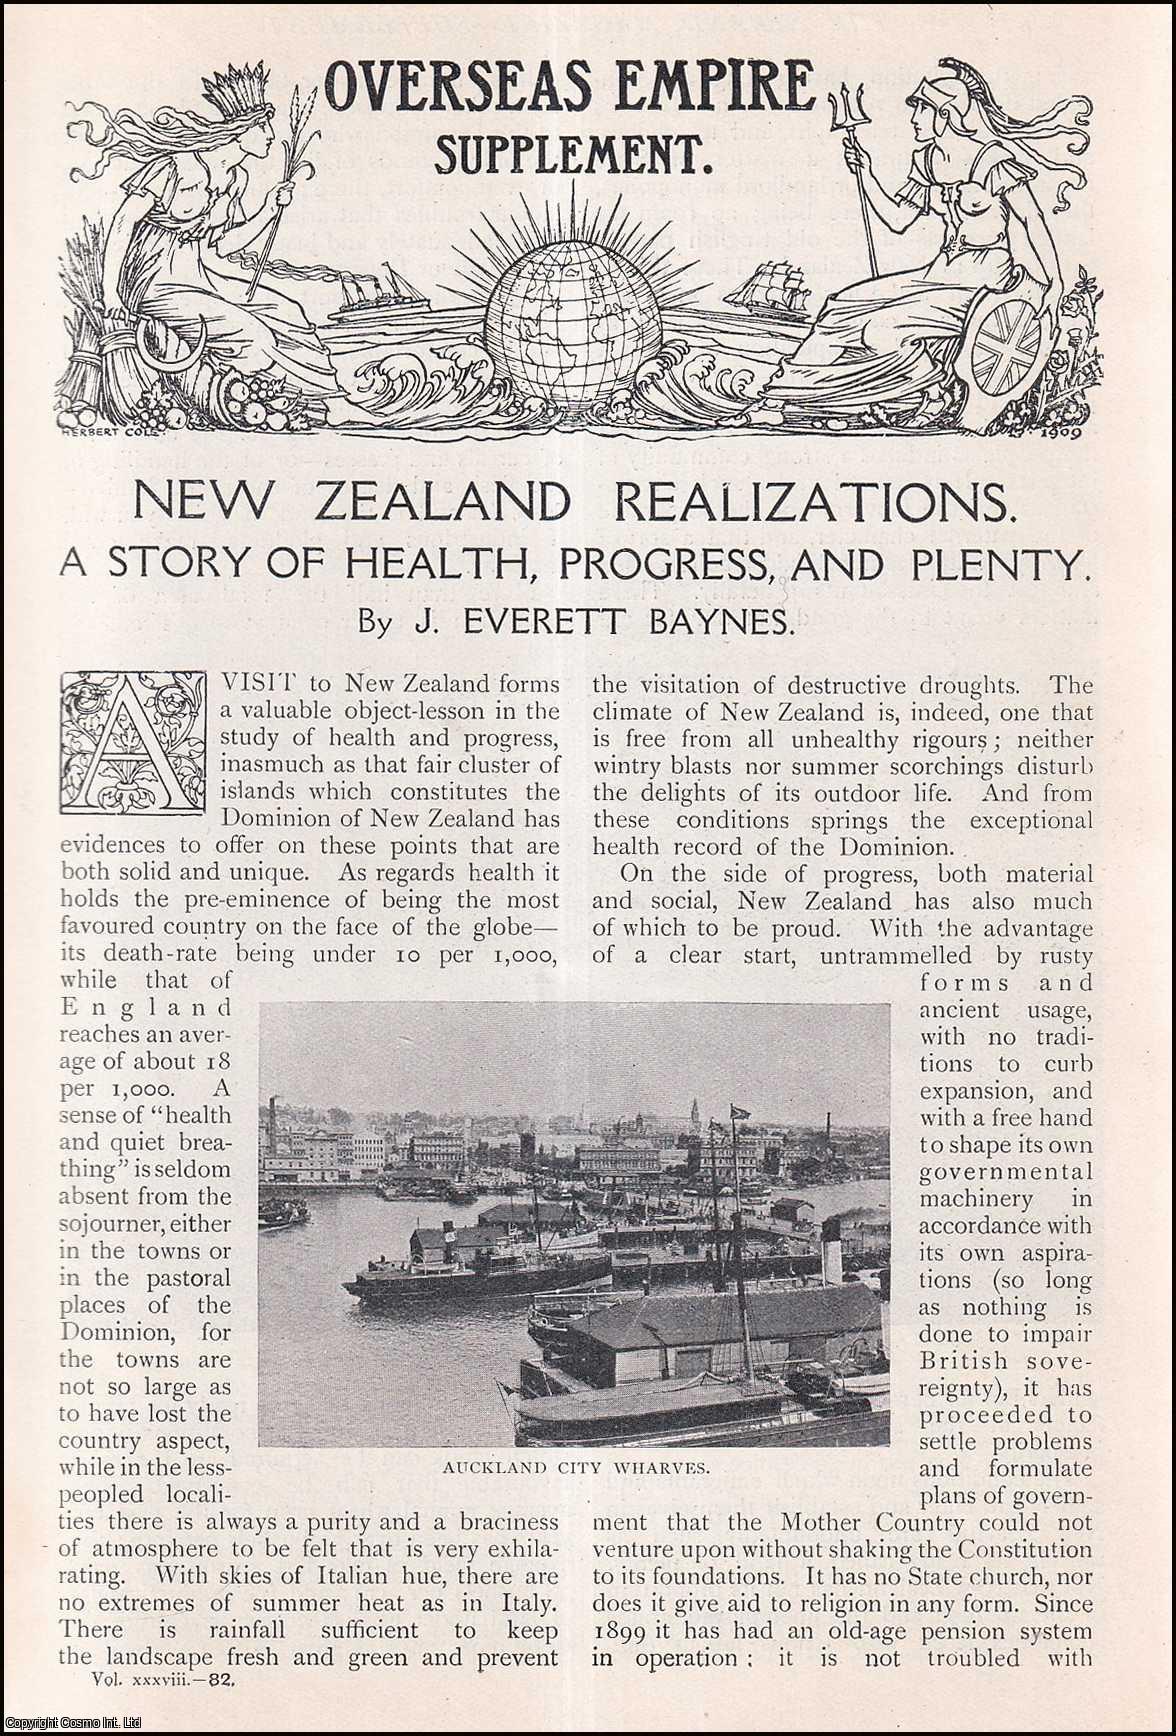 J. Everett Baynes - New Zealand Realizations : a story of Health, Progress, & Plenty. An uncommon original article from The Strand Magazine, 1909.